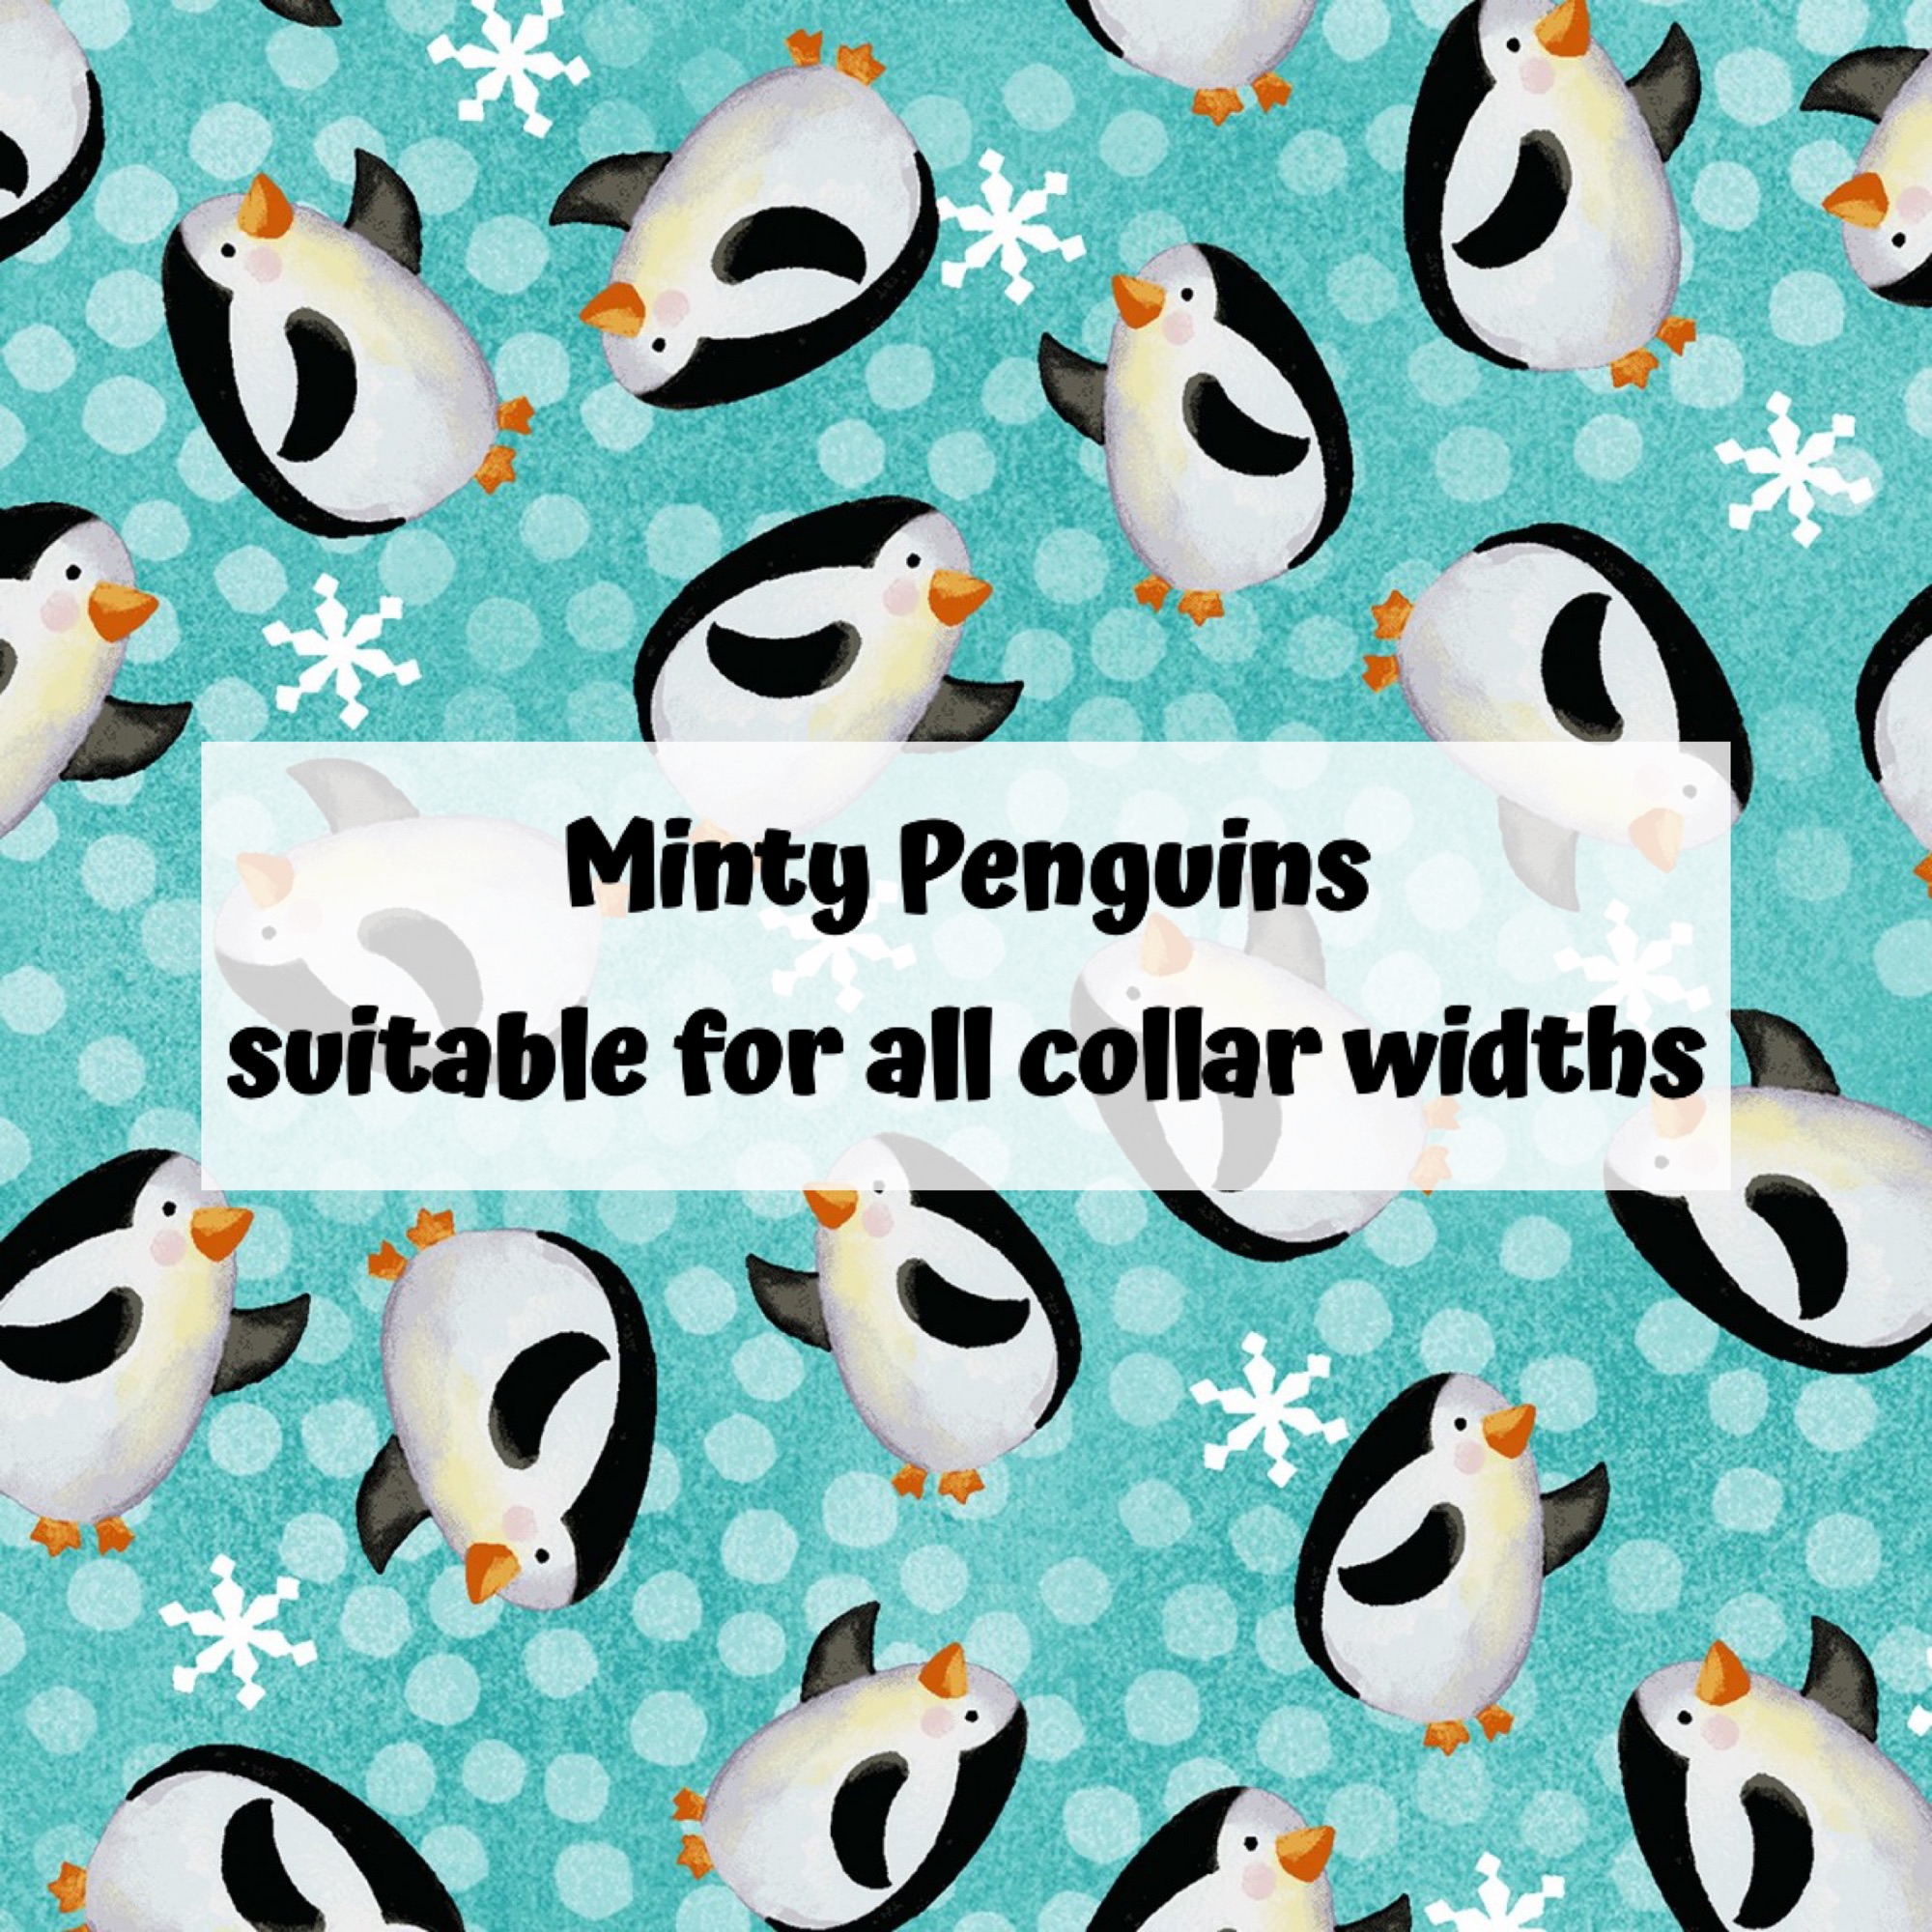 Minty Penguins